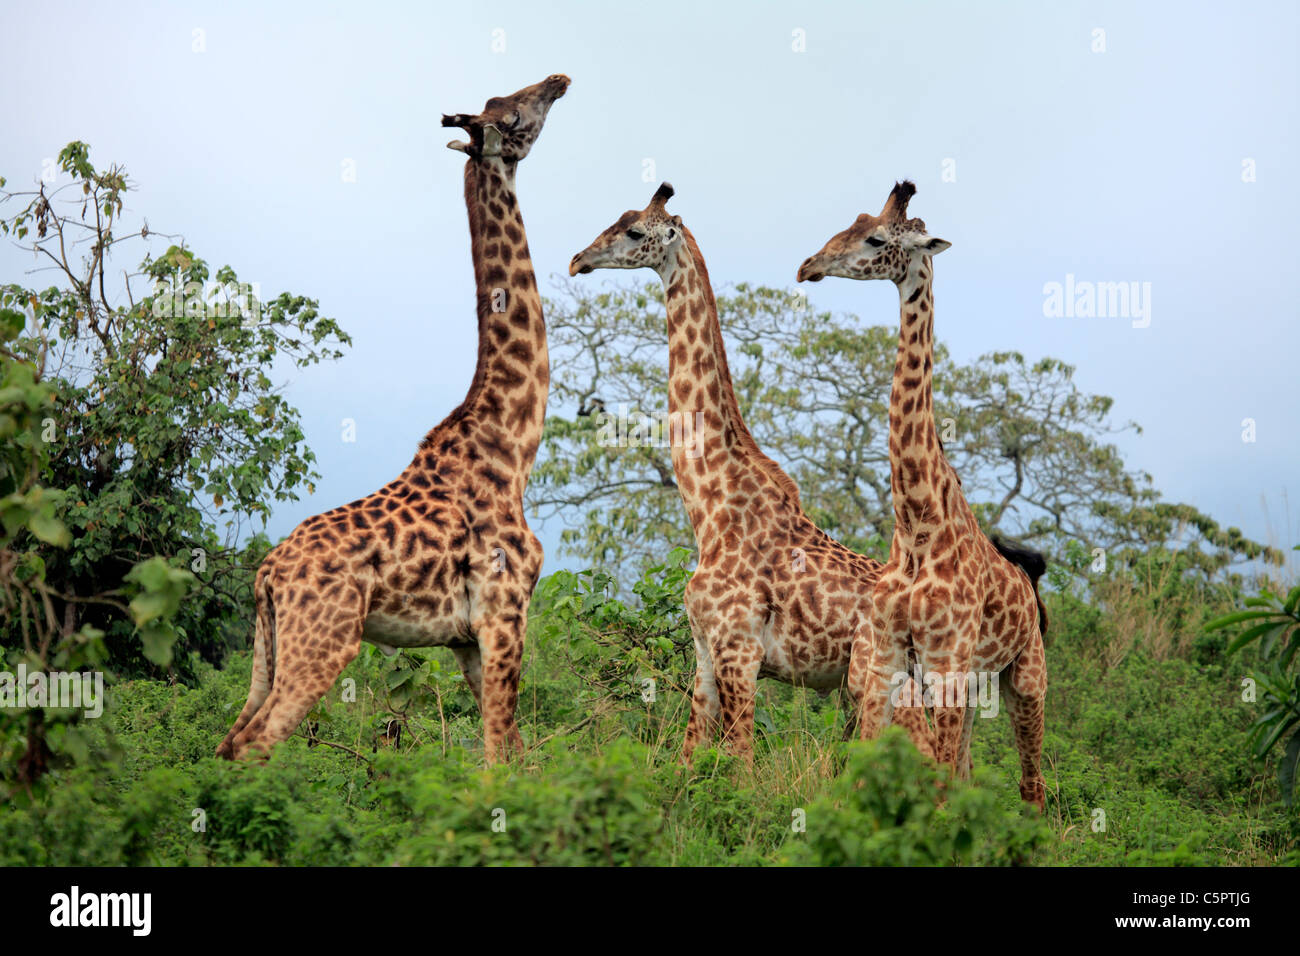 Giraffa camelopardalis (Giraffe), Arusha national park, Tanzania Stock Photo